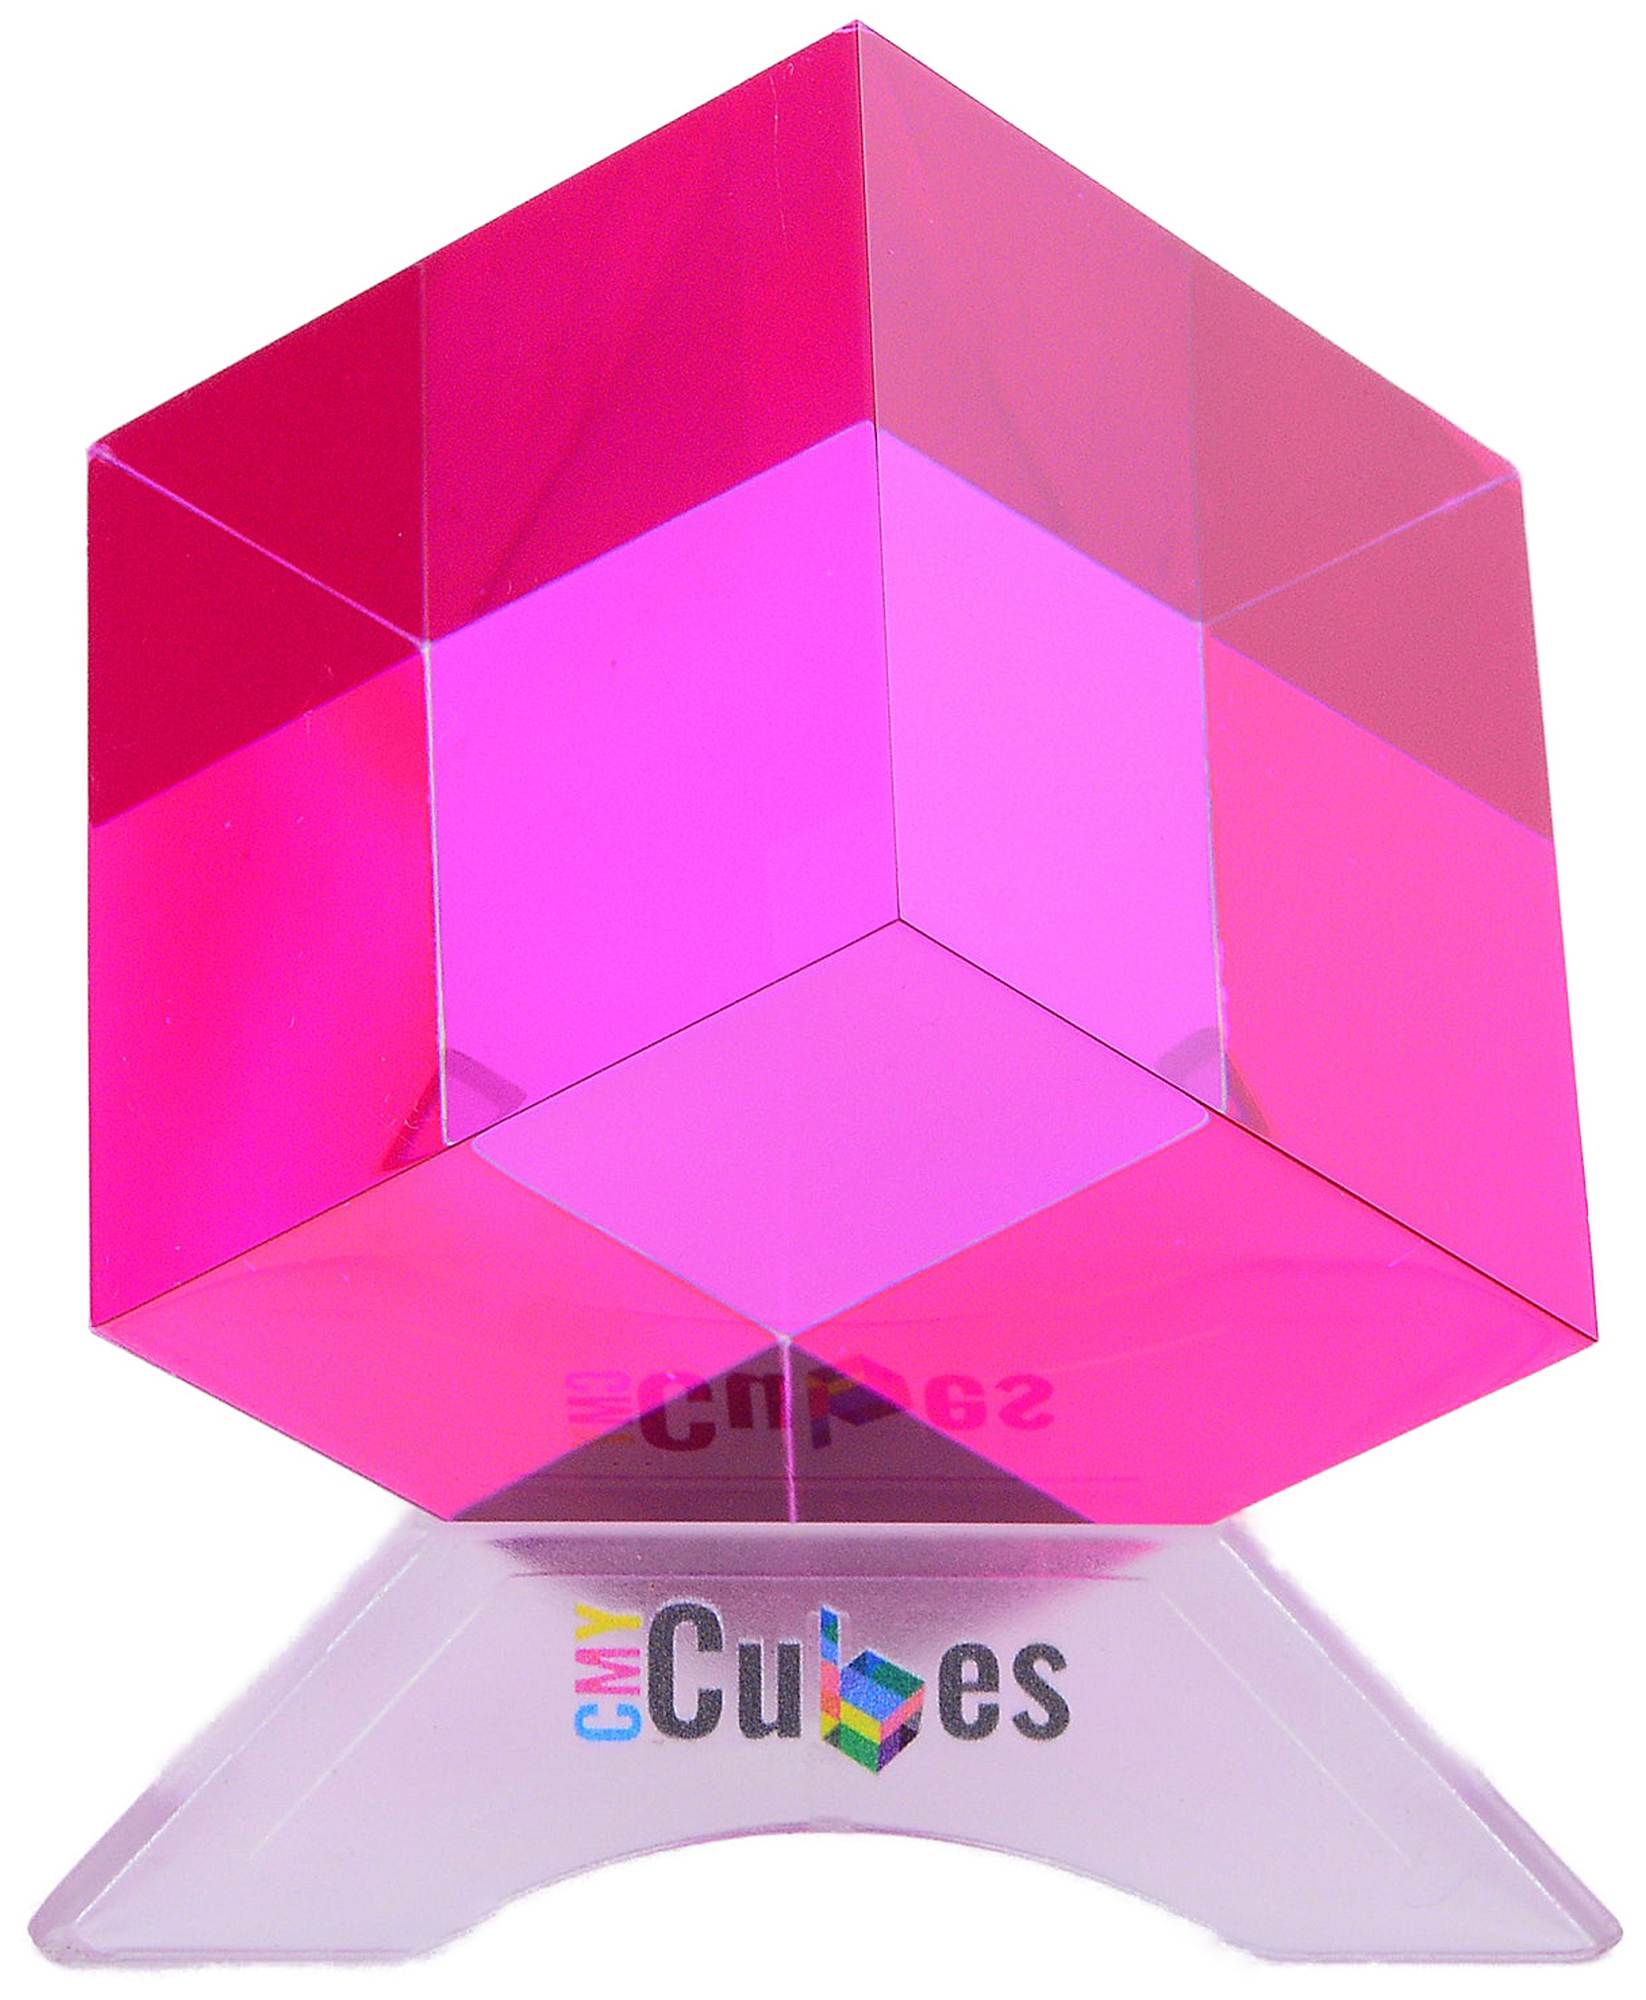 Dispersionsprisma "CMY Cube: Der M-Würfel"